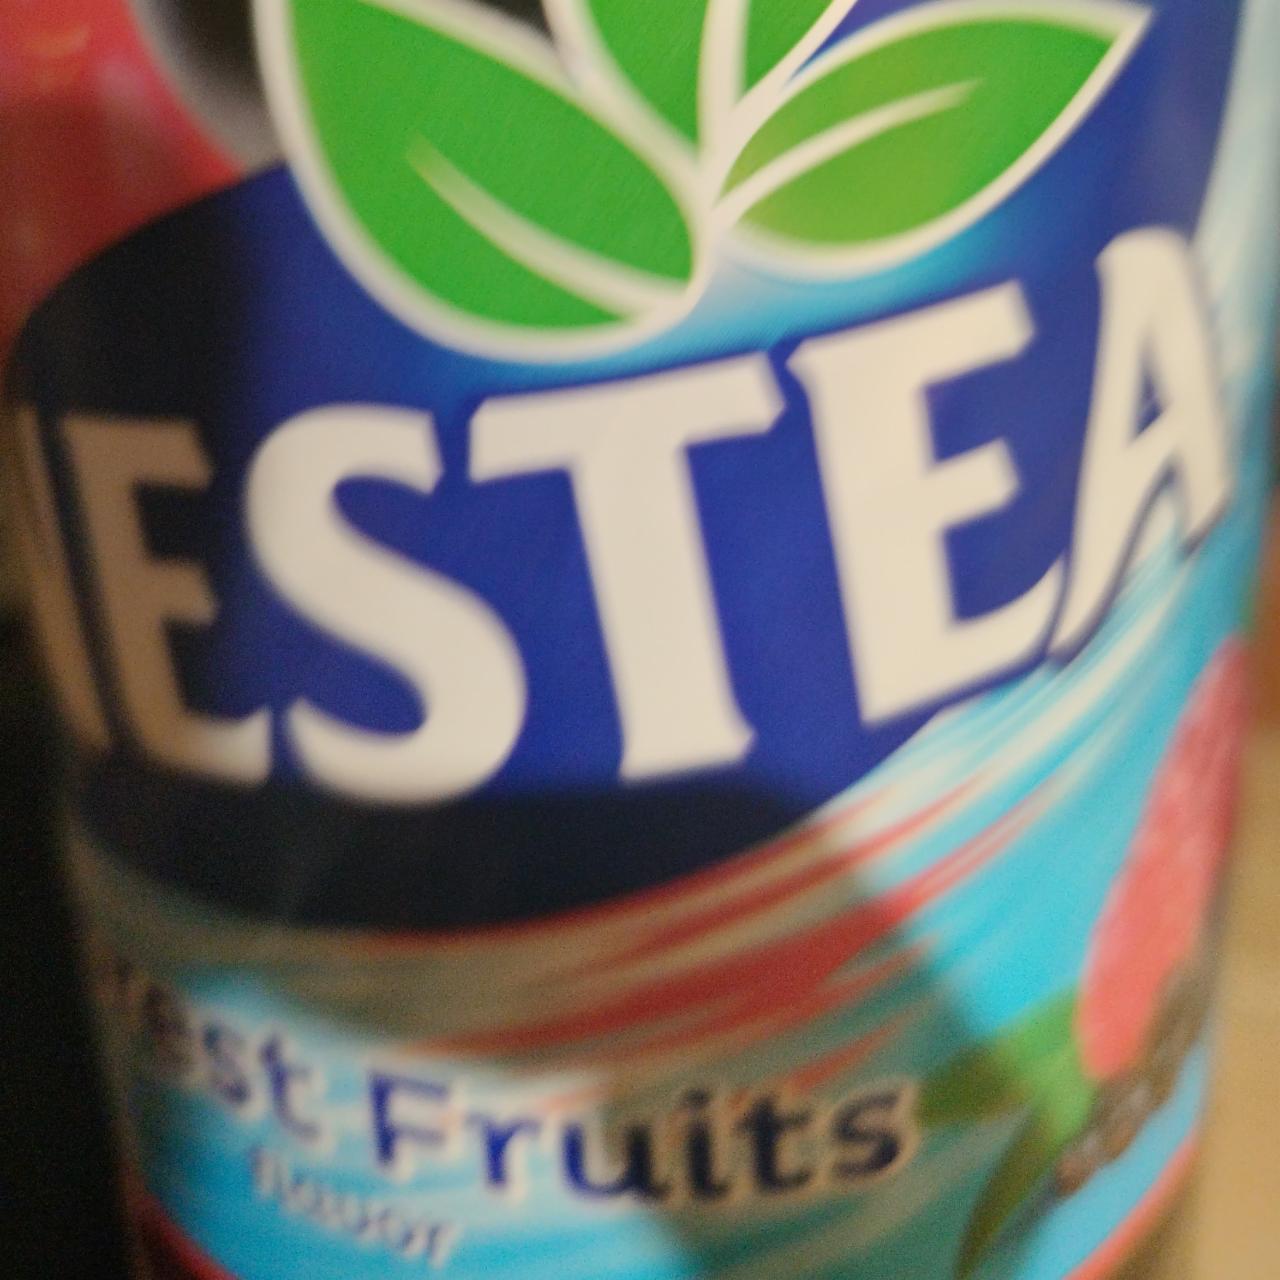 Fotografie - Forest fruits Nestea